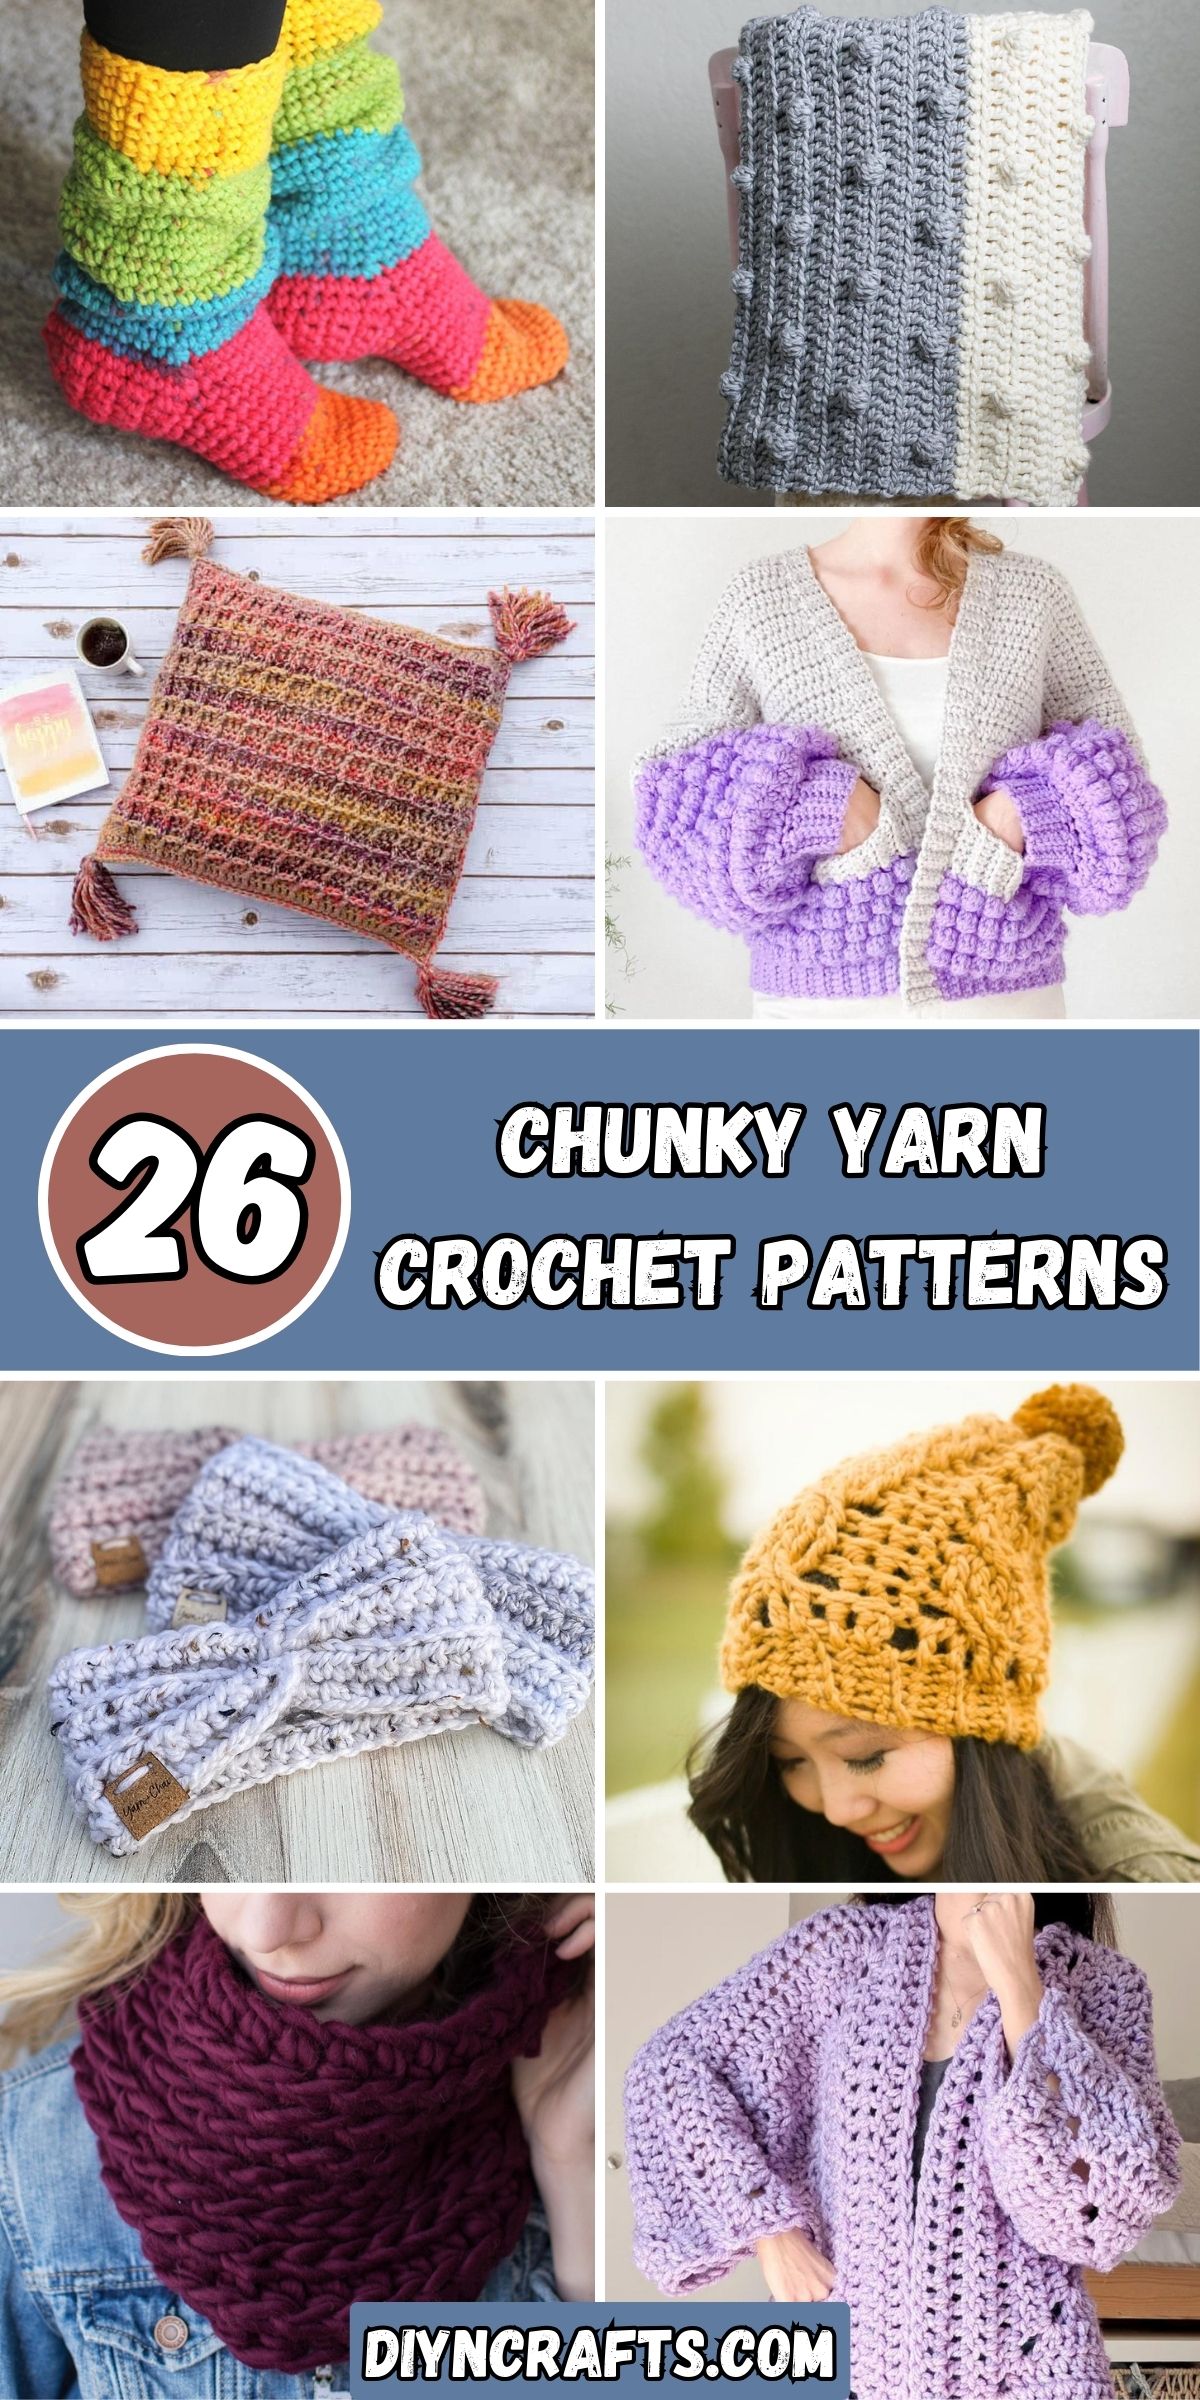 26 Chunky Yarn Crochet Patterns collage.